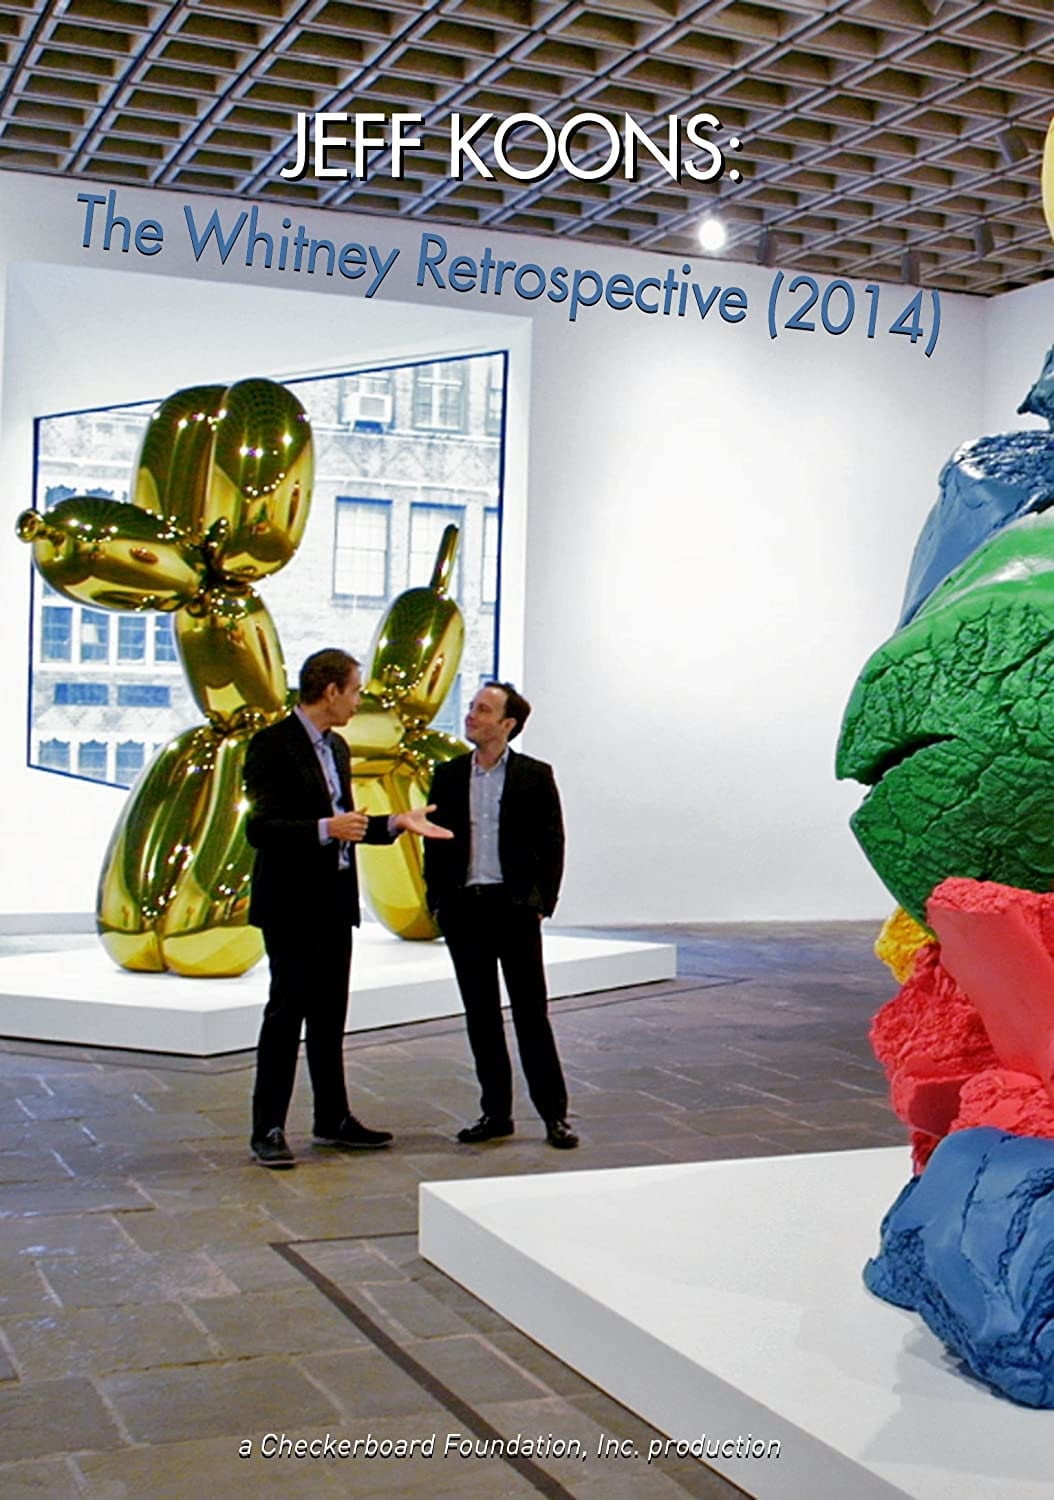 Jeff Koons: The Whitney Retrospective